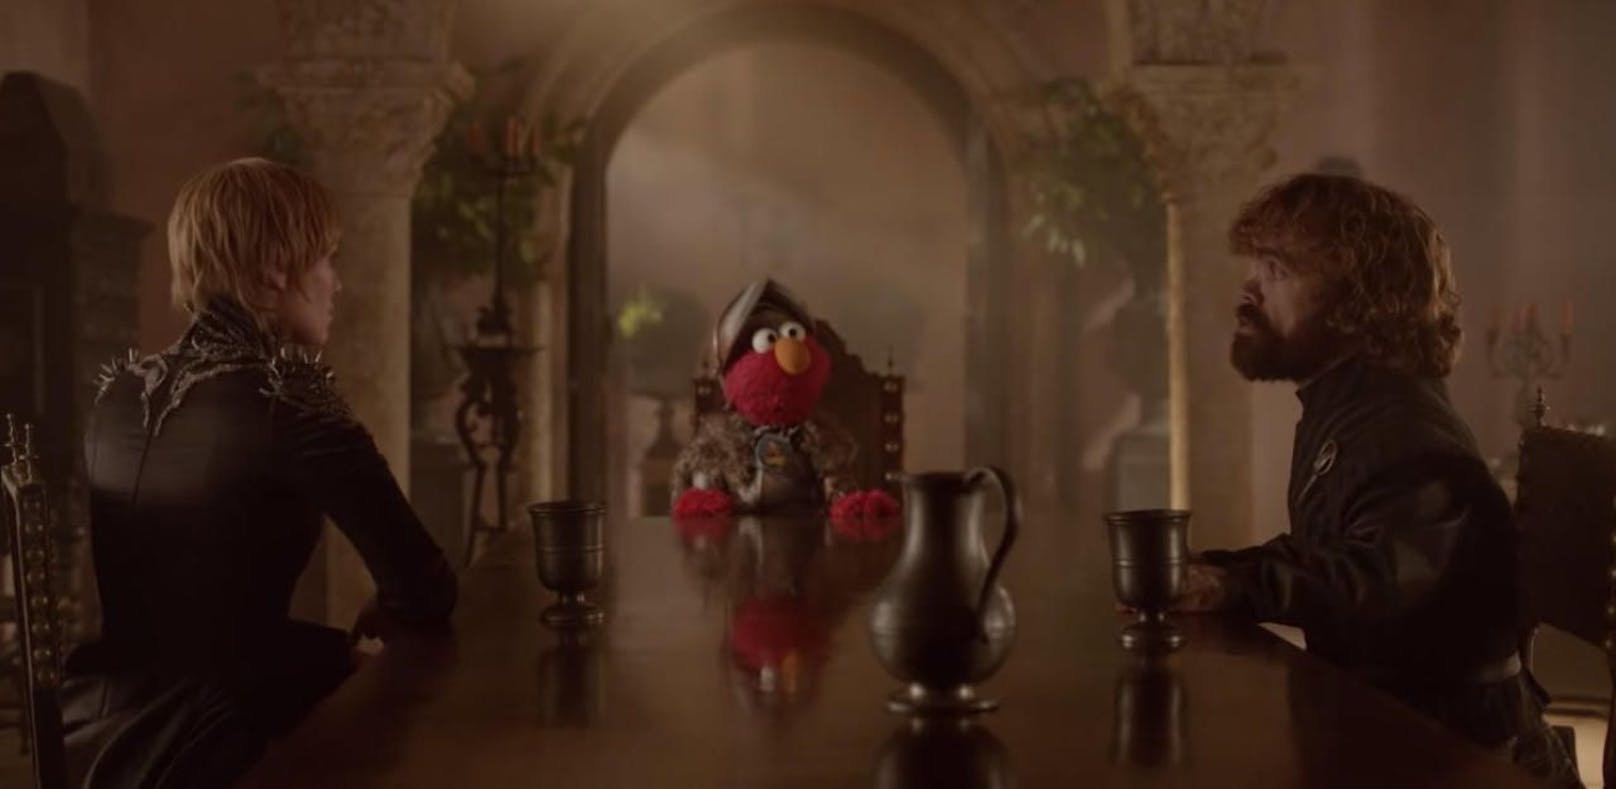 Elmo bringt "Game of Thrones" Respekt bei